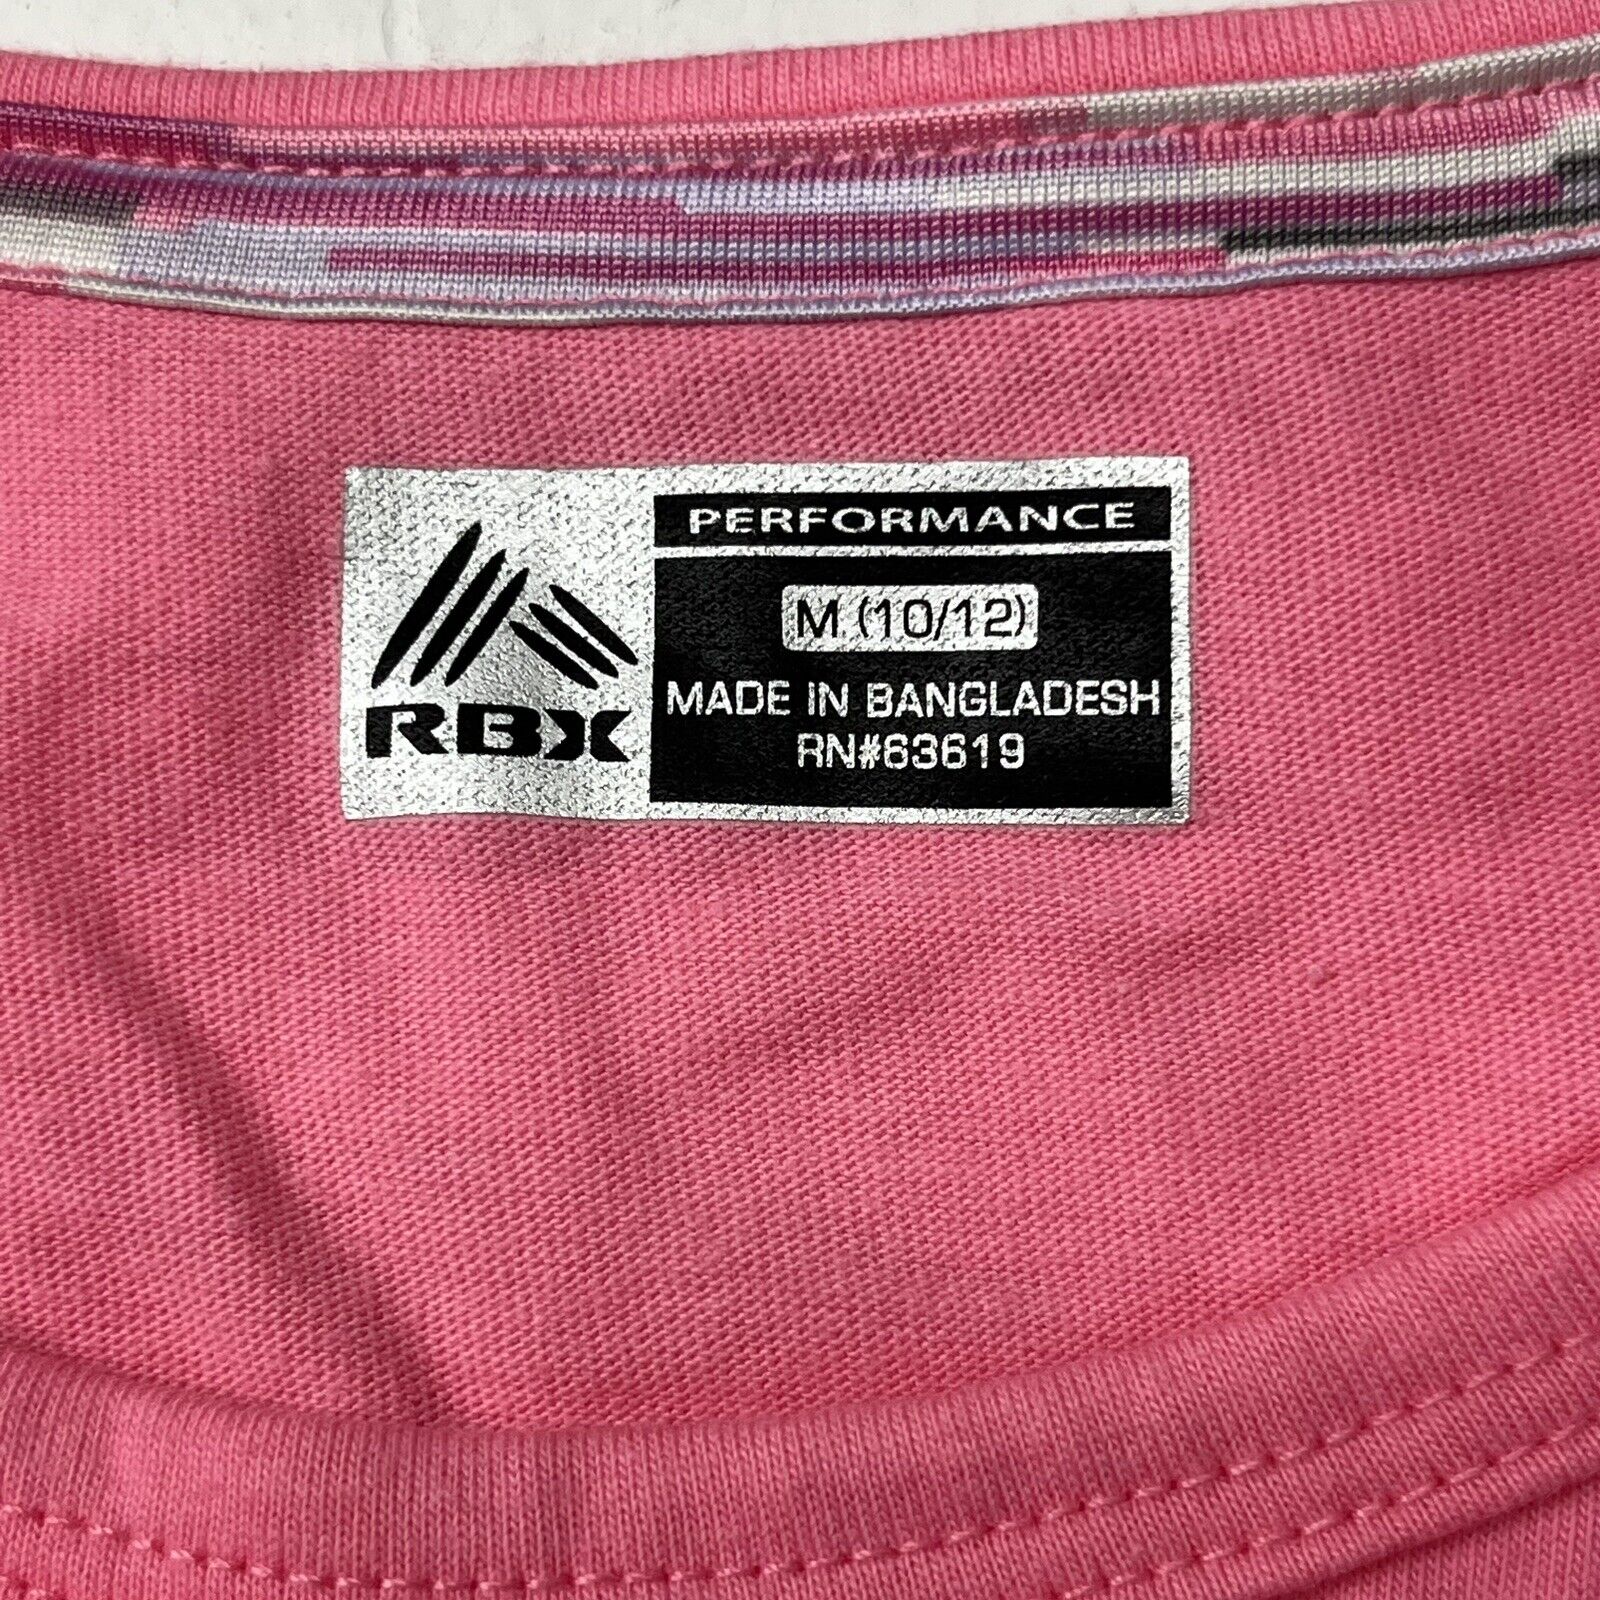 RBX Pink Whip Marled 3 Piece Set Girls Size Medium 10/12 NEW